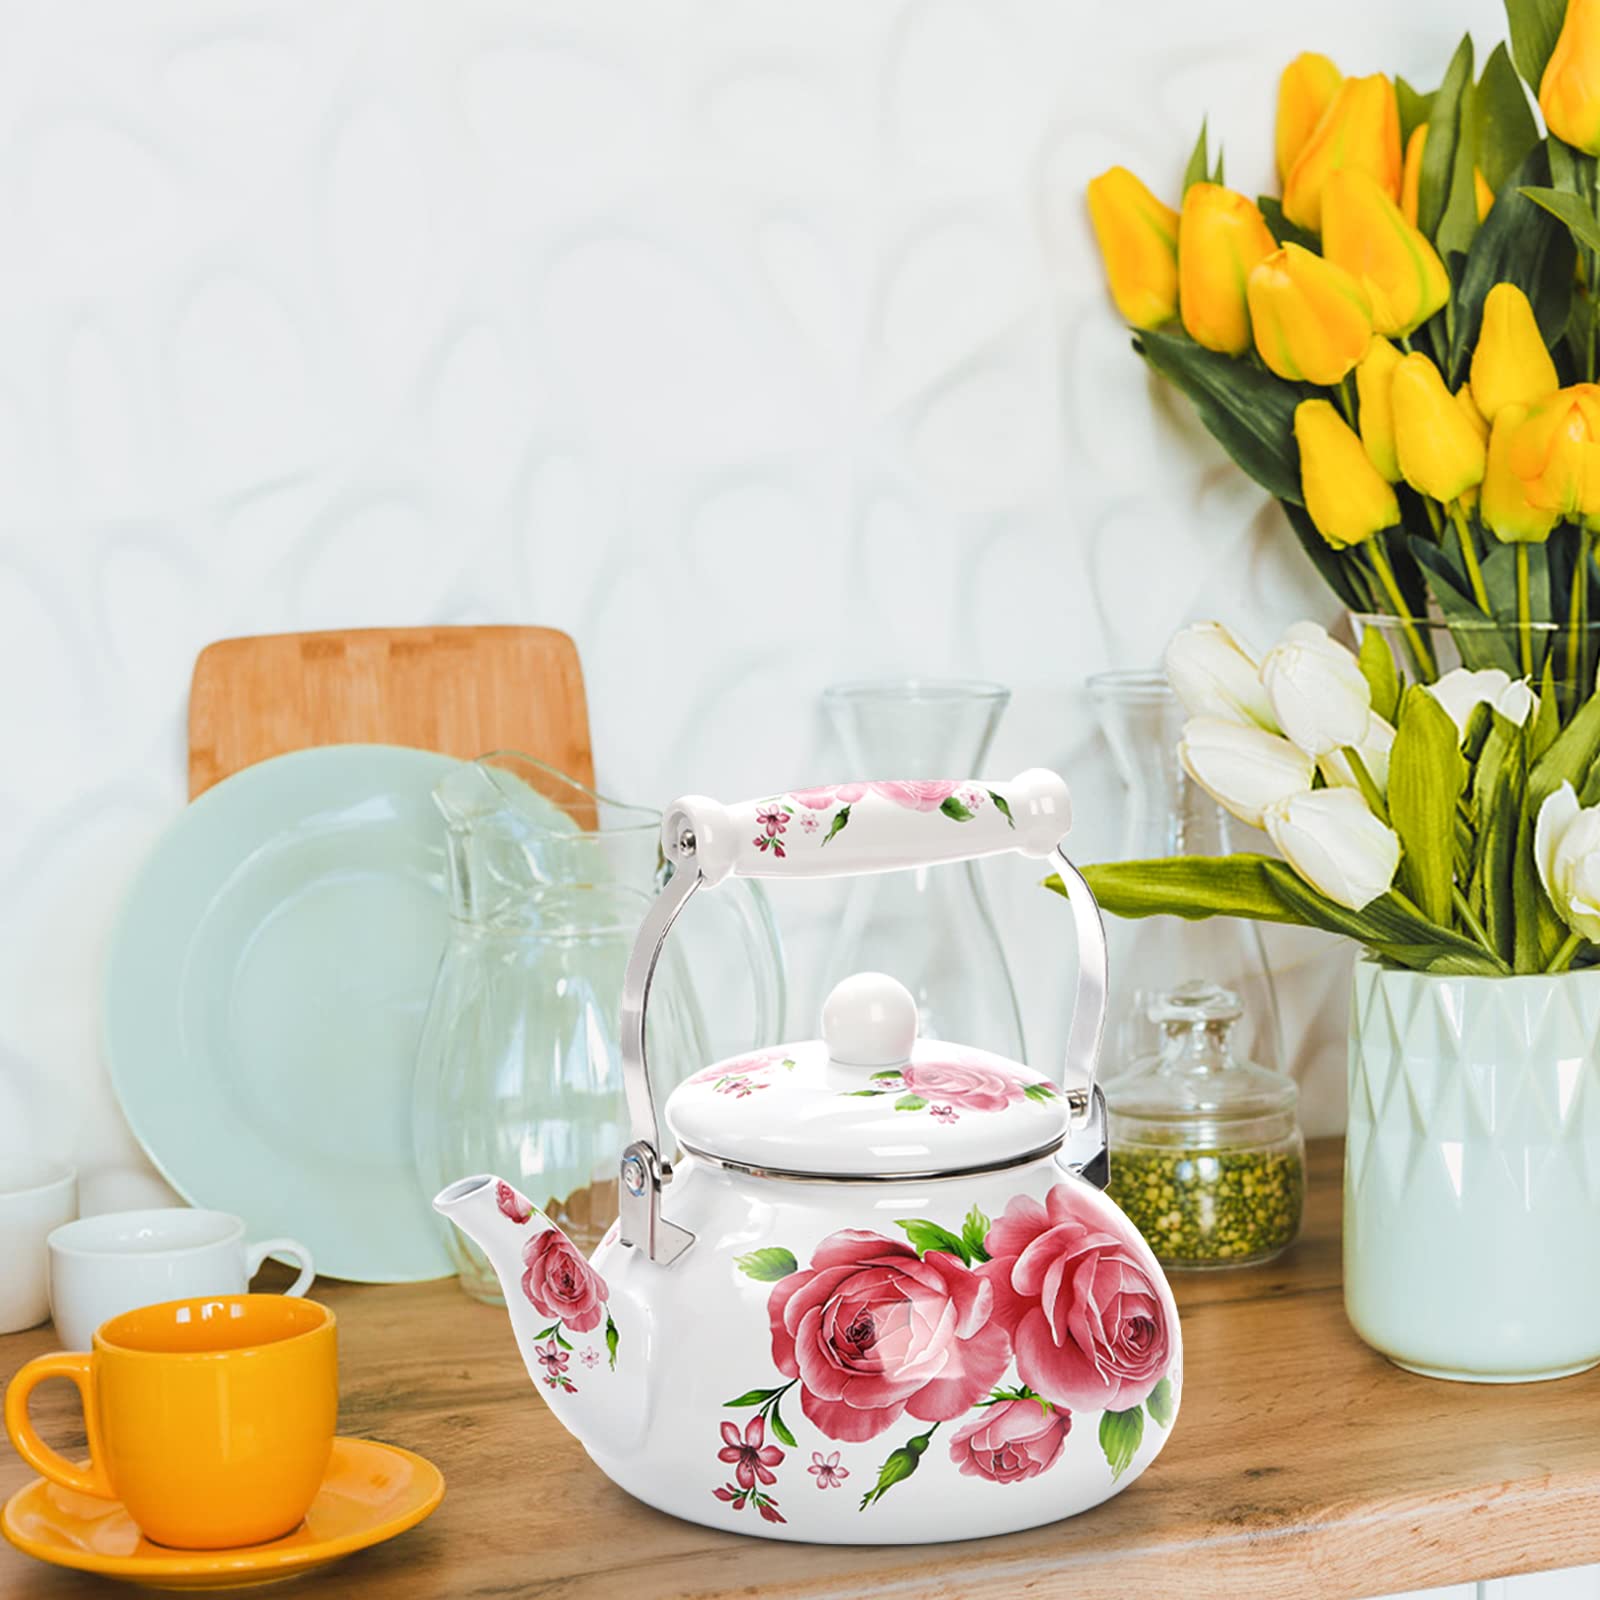 Hiceeden 2.5L Enamel Tea Pot for Stovetop, Pink Vintage Tea Kettle with Floral Pattern, Delicate Cute Steel Water Kettle Pot with Porcelain Handle